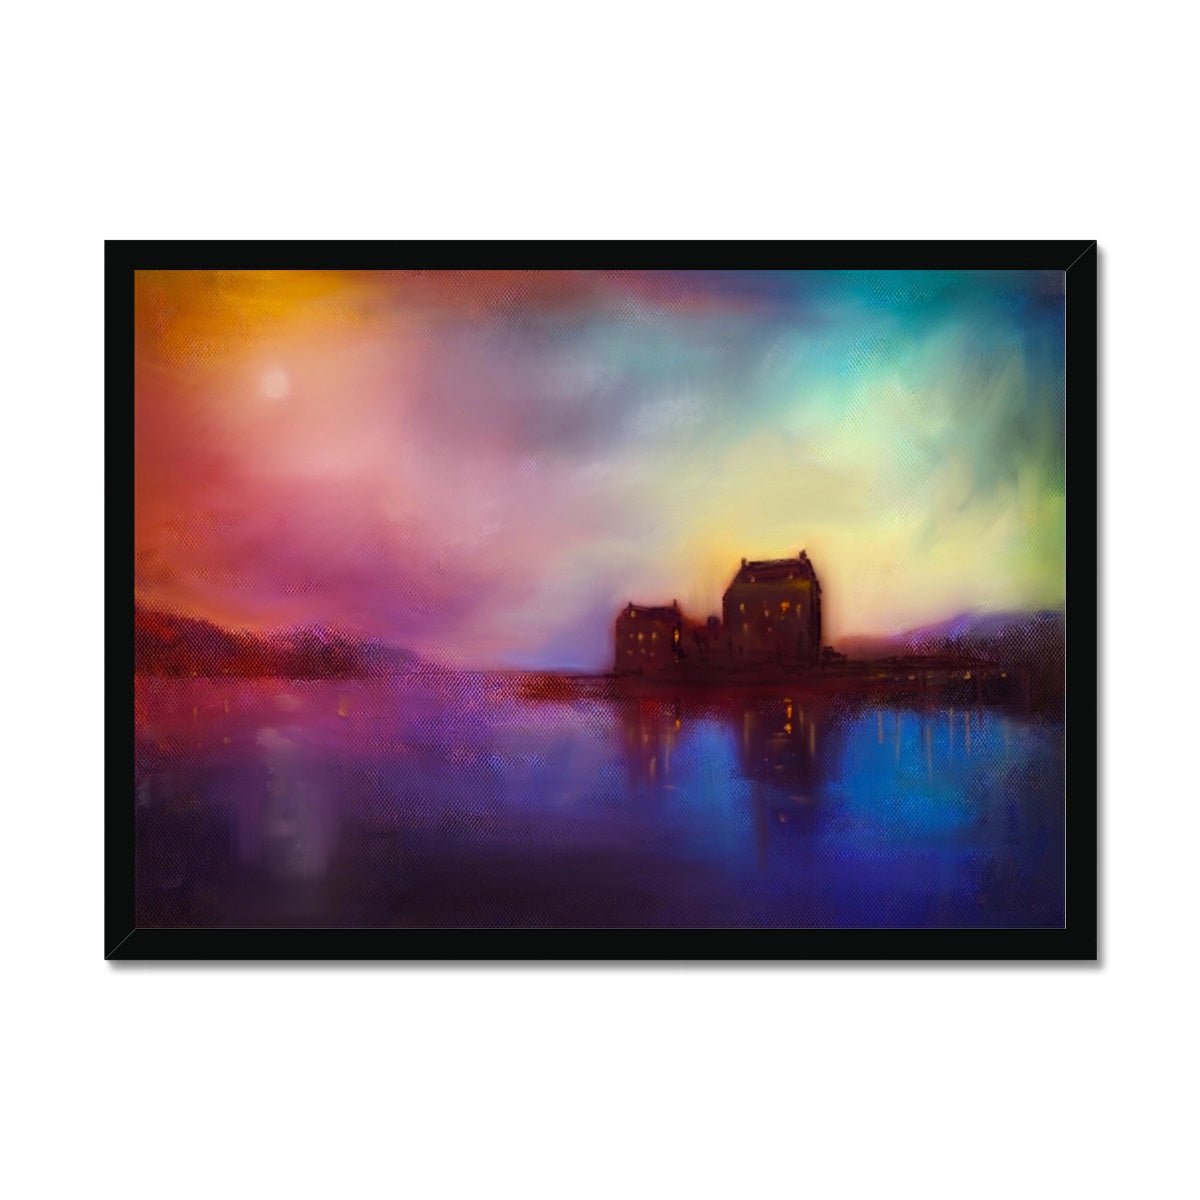 Eilean Donan Castle Sunset Painting | Framed Prints From Scotland-Framed Prints-Historic & Iconic Scotland Art Gallery-A2 Landscape-Black Frame-Paintings, Prints, Homeware, Art Gifts From Scotland By Scottish Artist Kevin Hunter